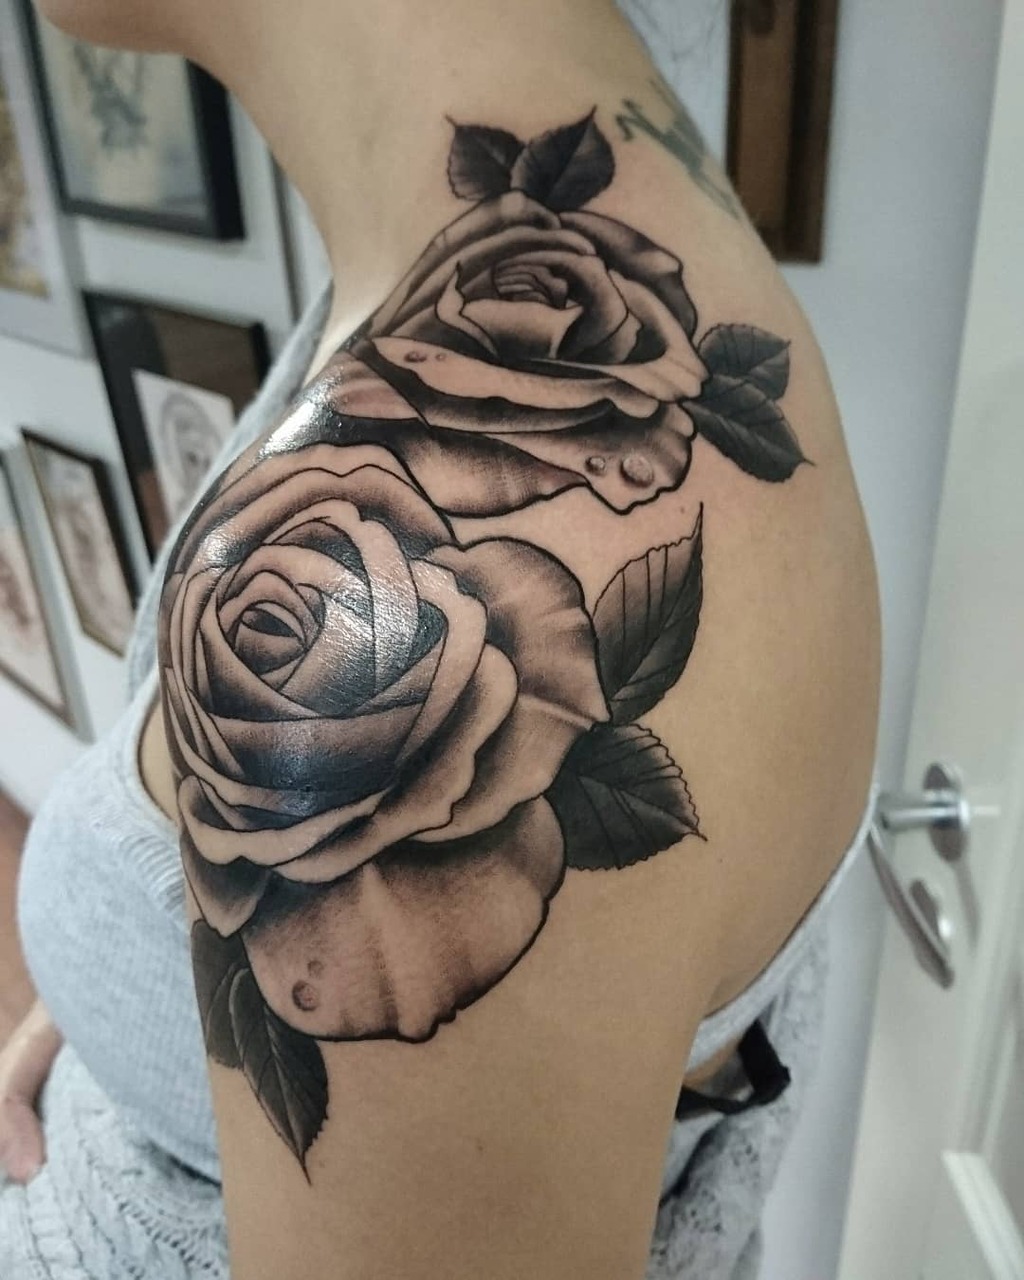 Women Rose Tattoo